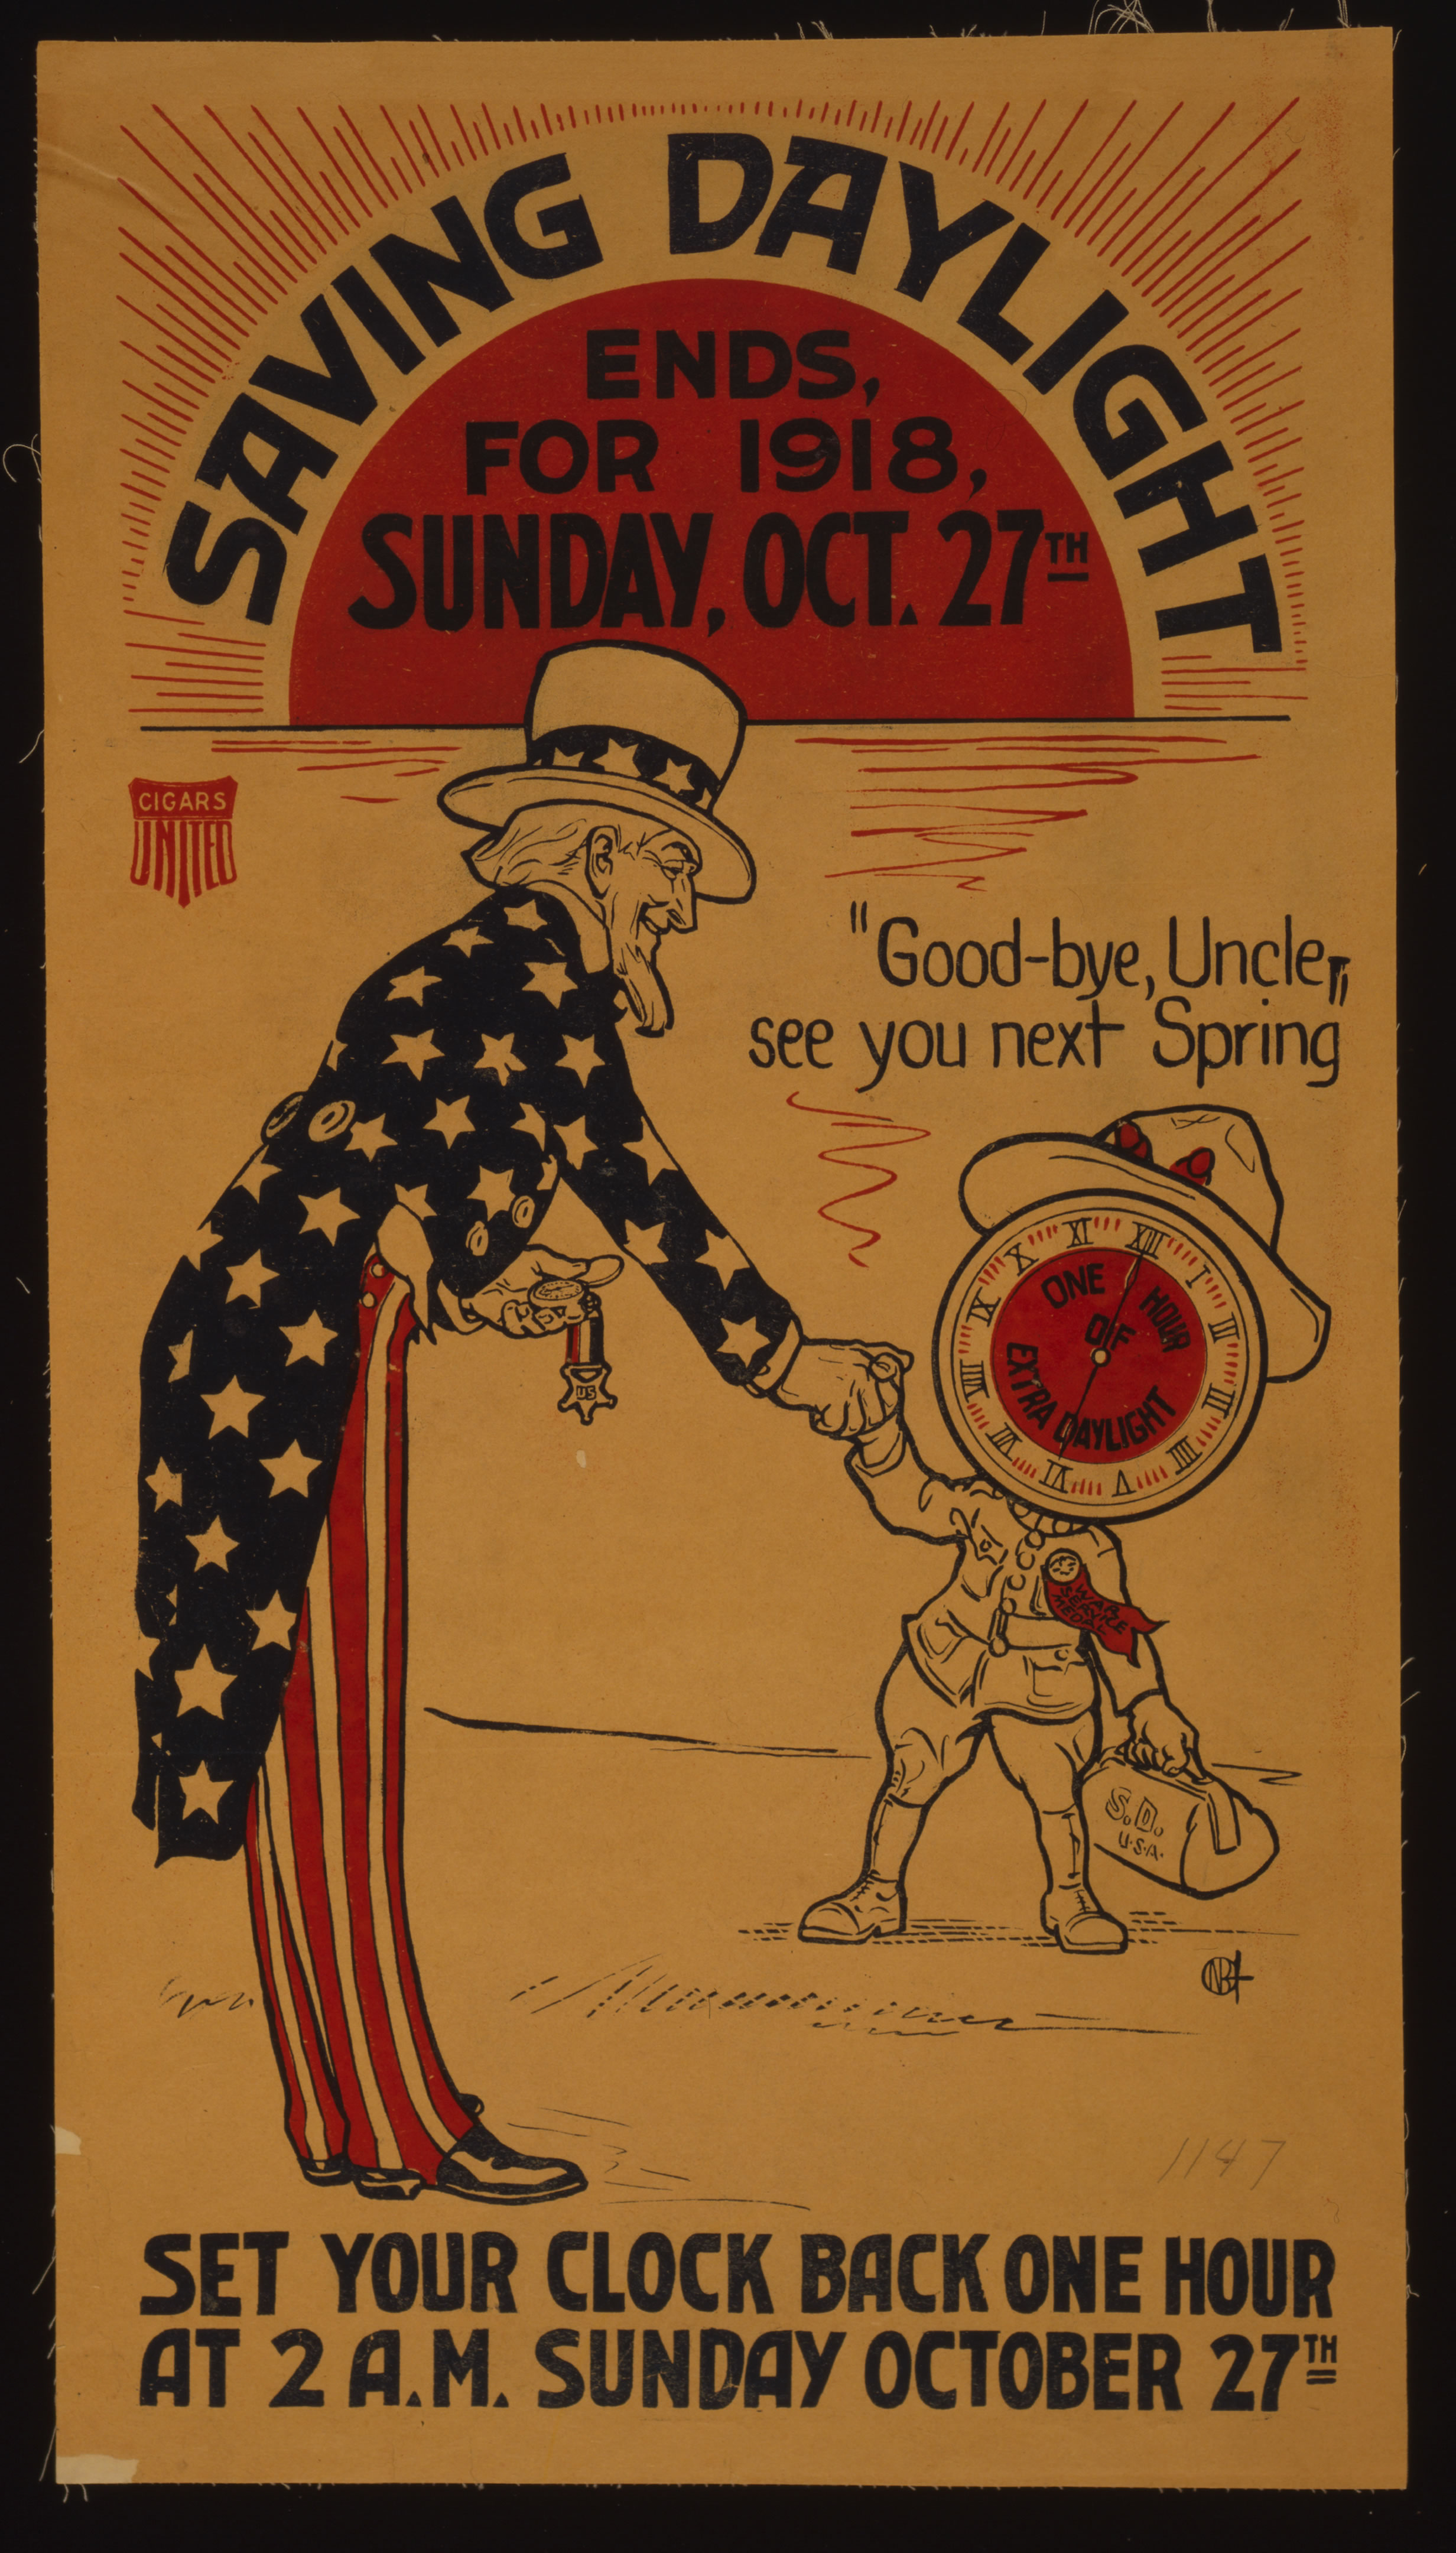 Broadside Accouncing End of Daylight Saving Time, 1918